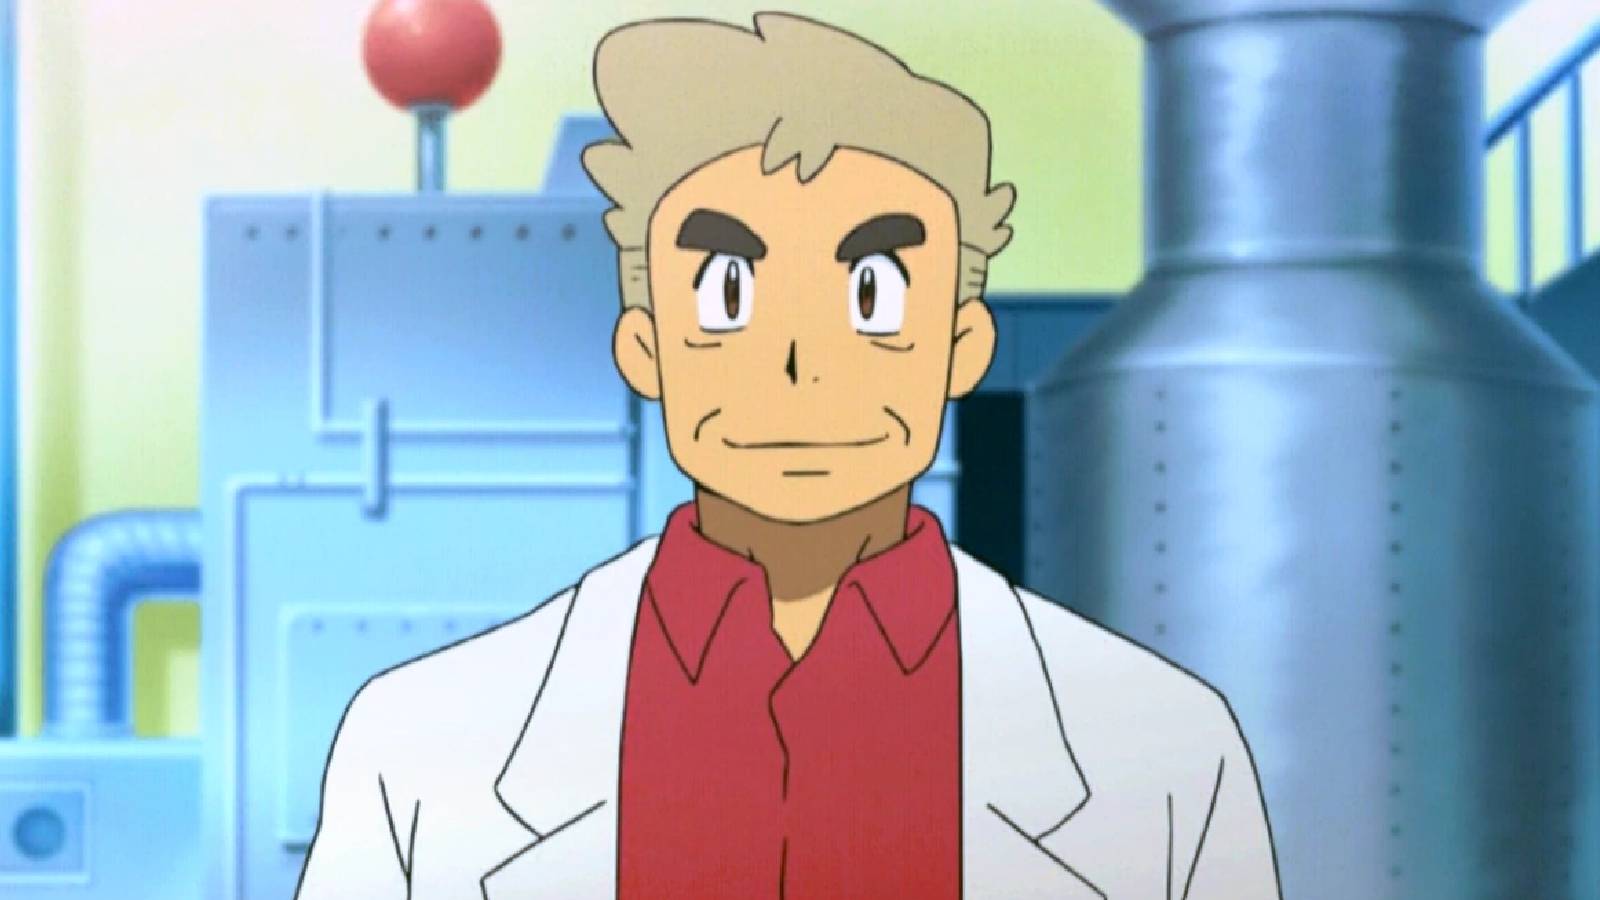 A screenshot from the Pokemon anime shows professor oak smiling